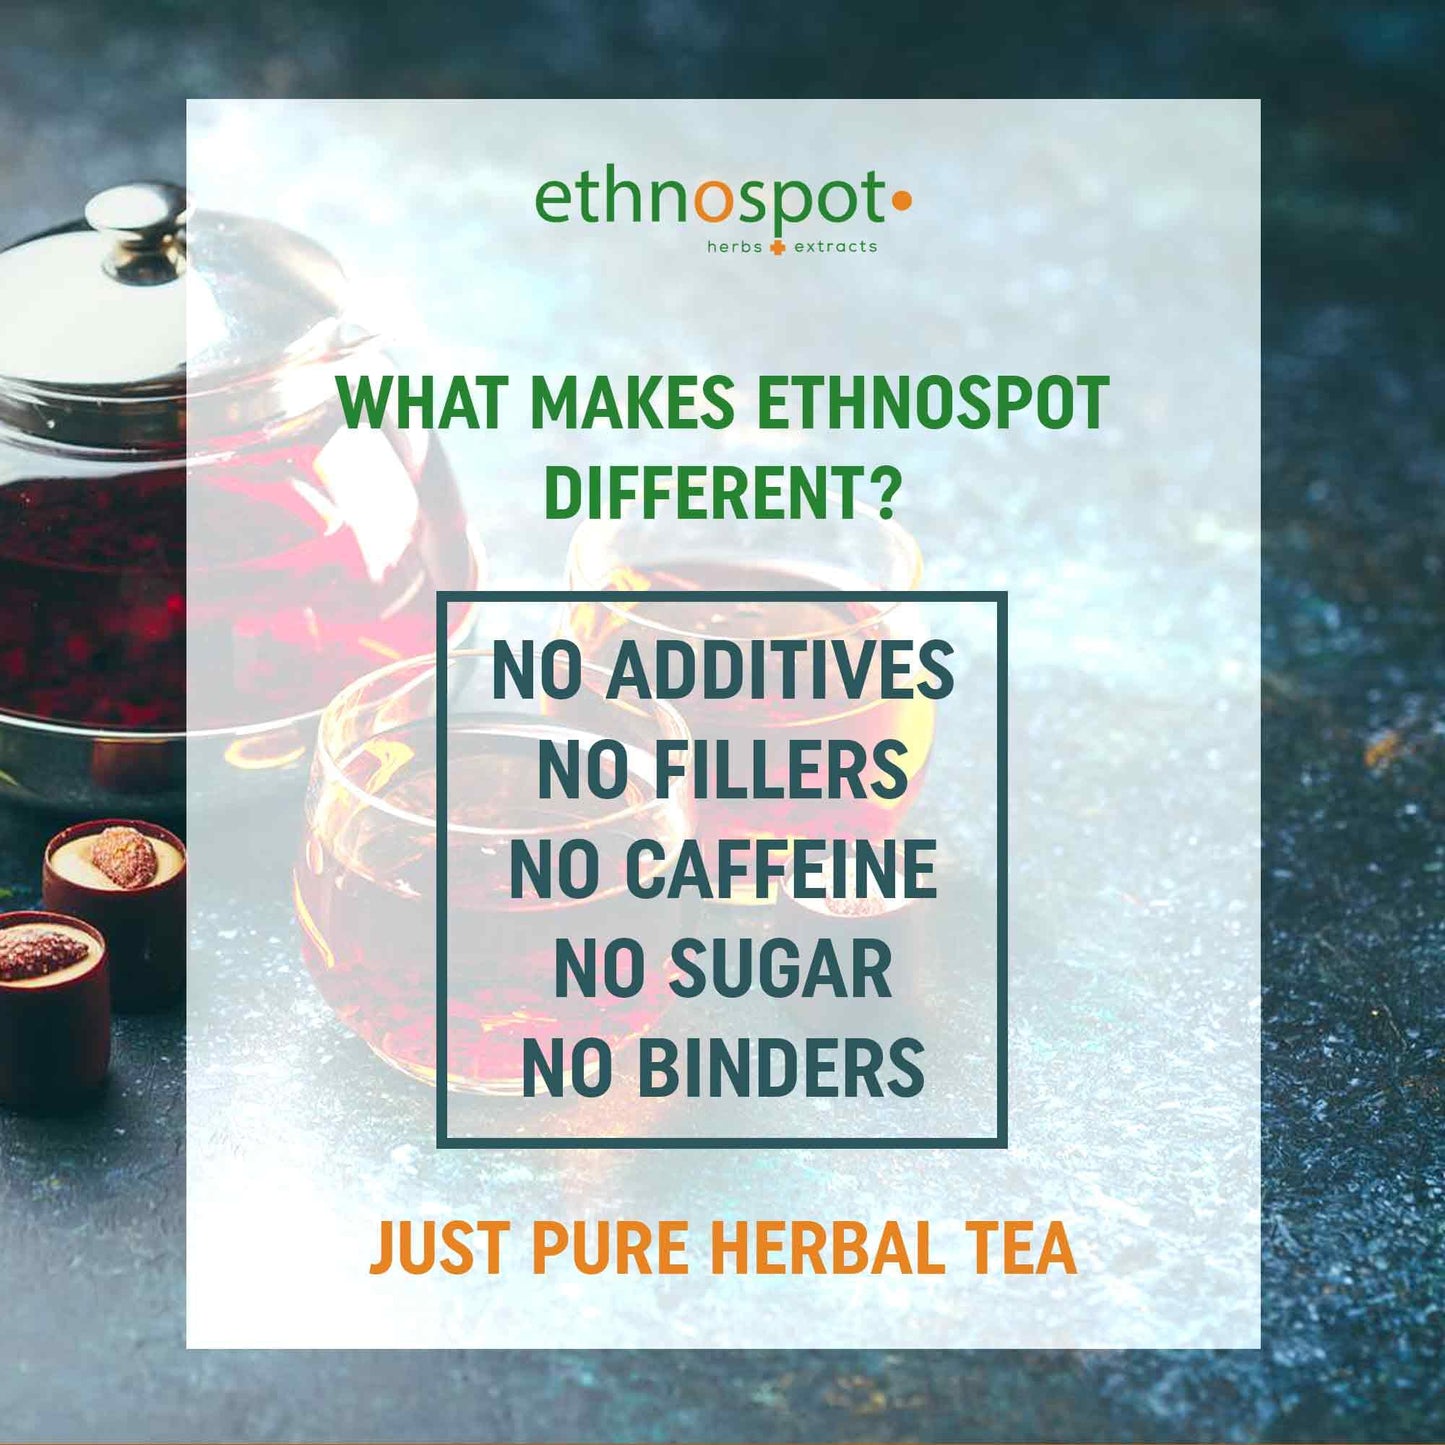 Bitter Orange Teabags - Energizing Herbal Tea